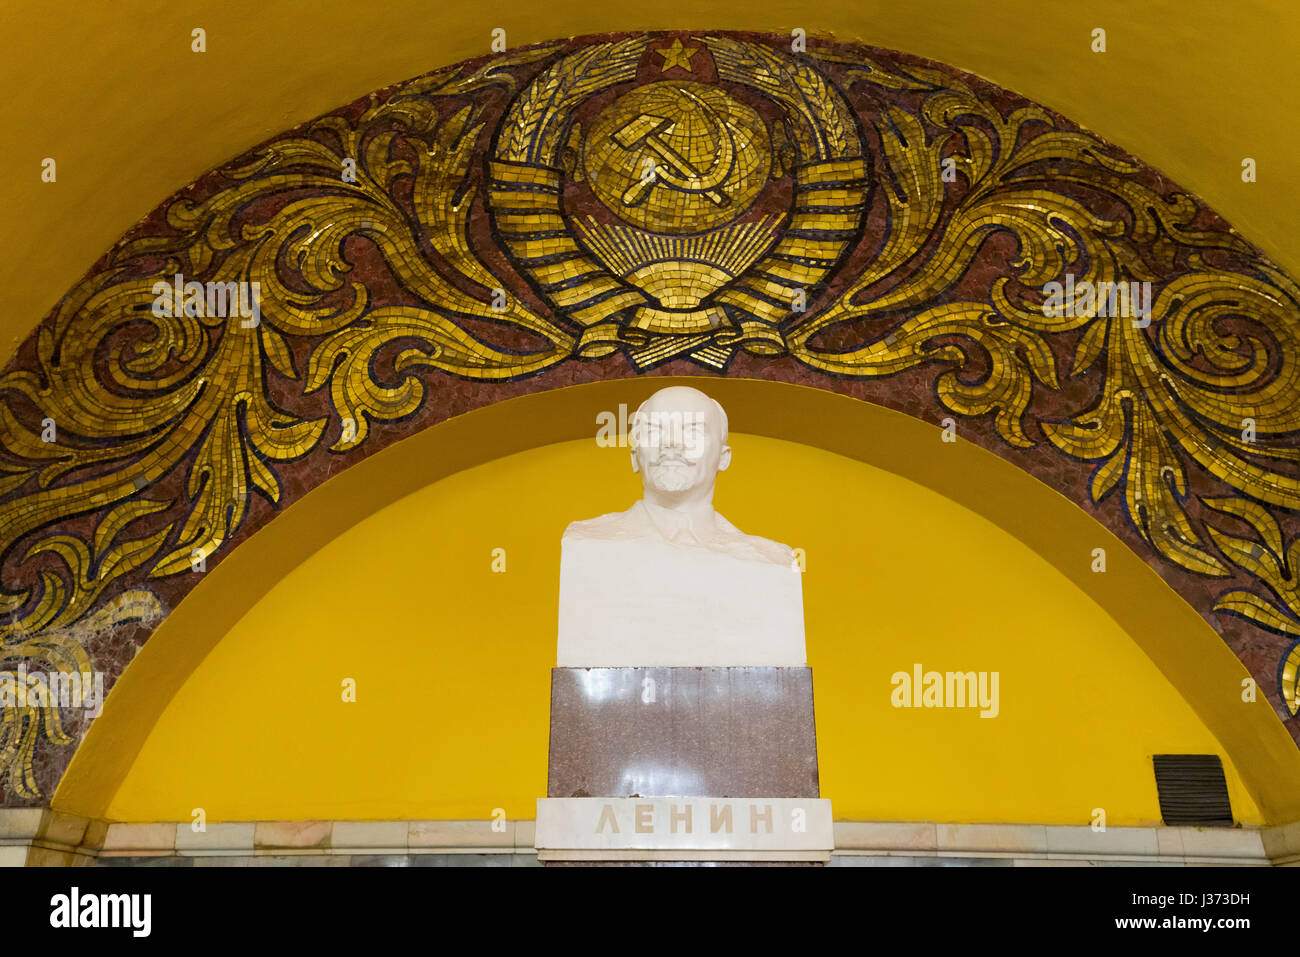 Lenin Statue inside Komsomolaskaya Metro Station, Moscow, Russian Federation Stock Photo